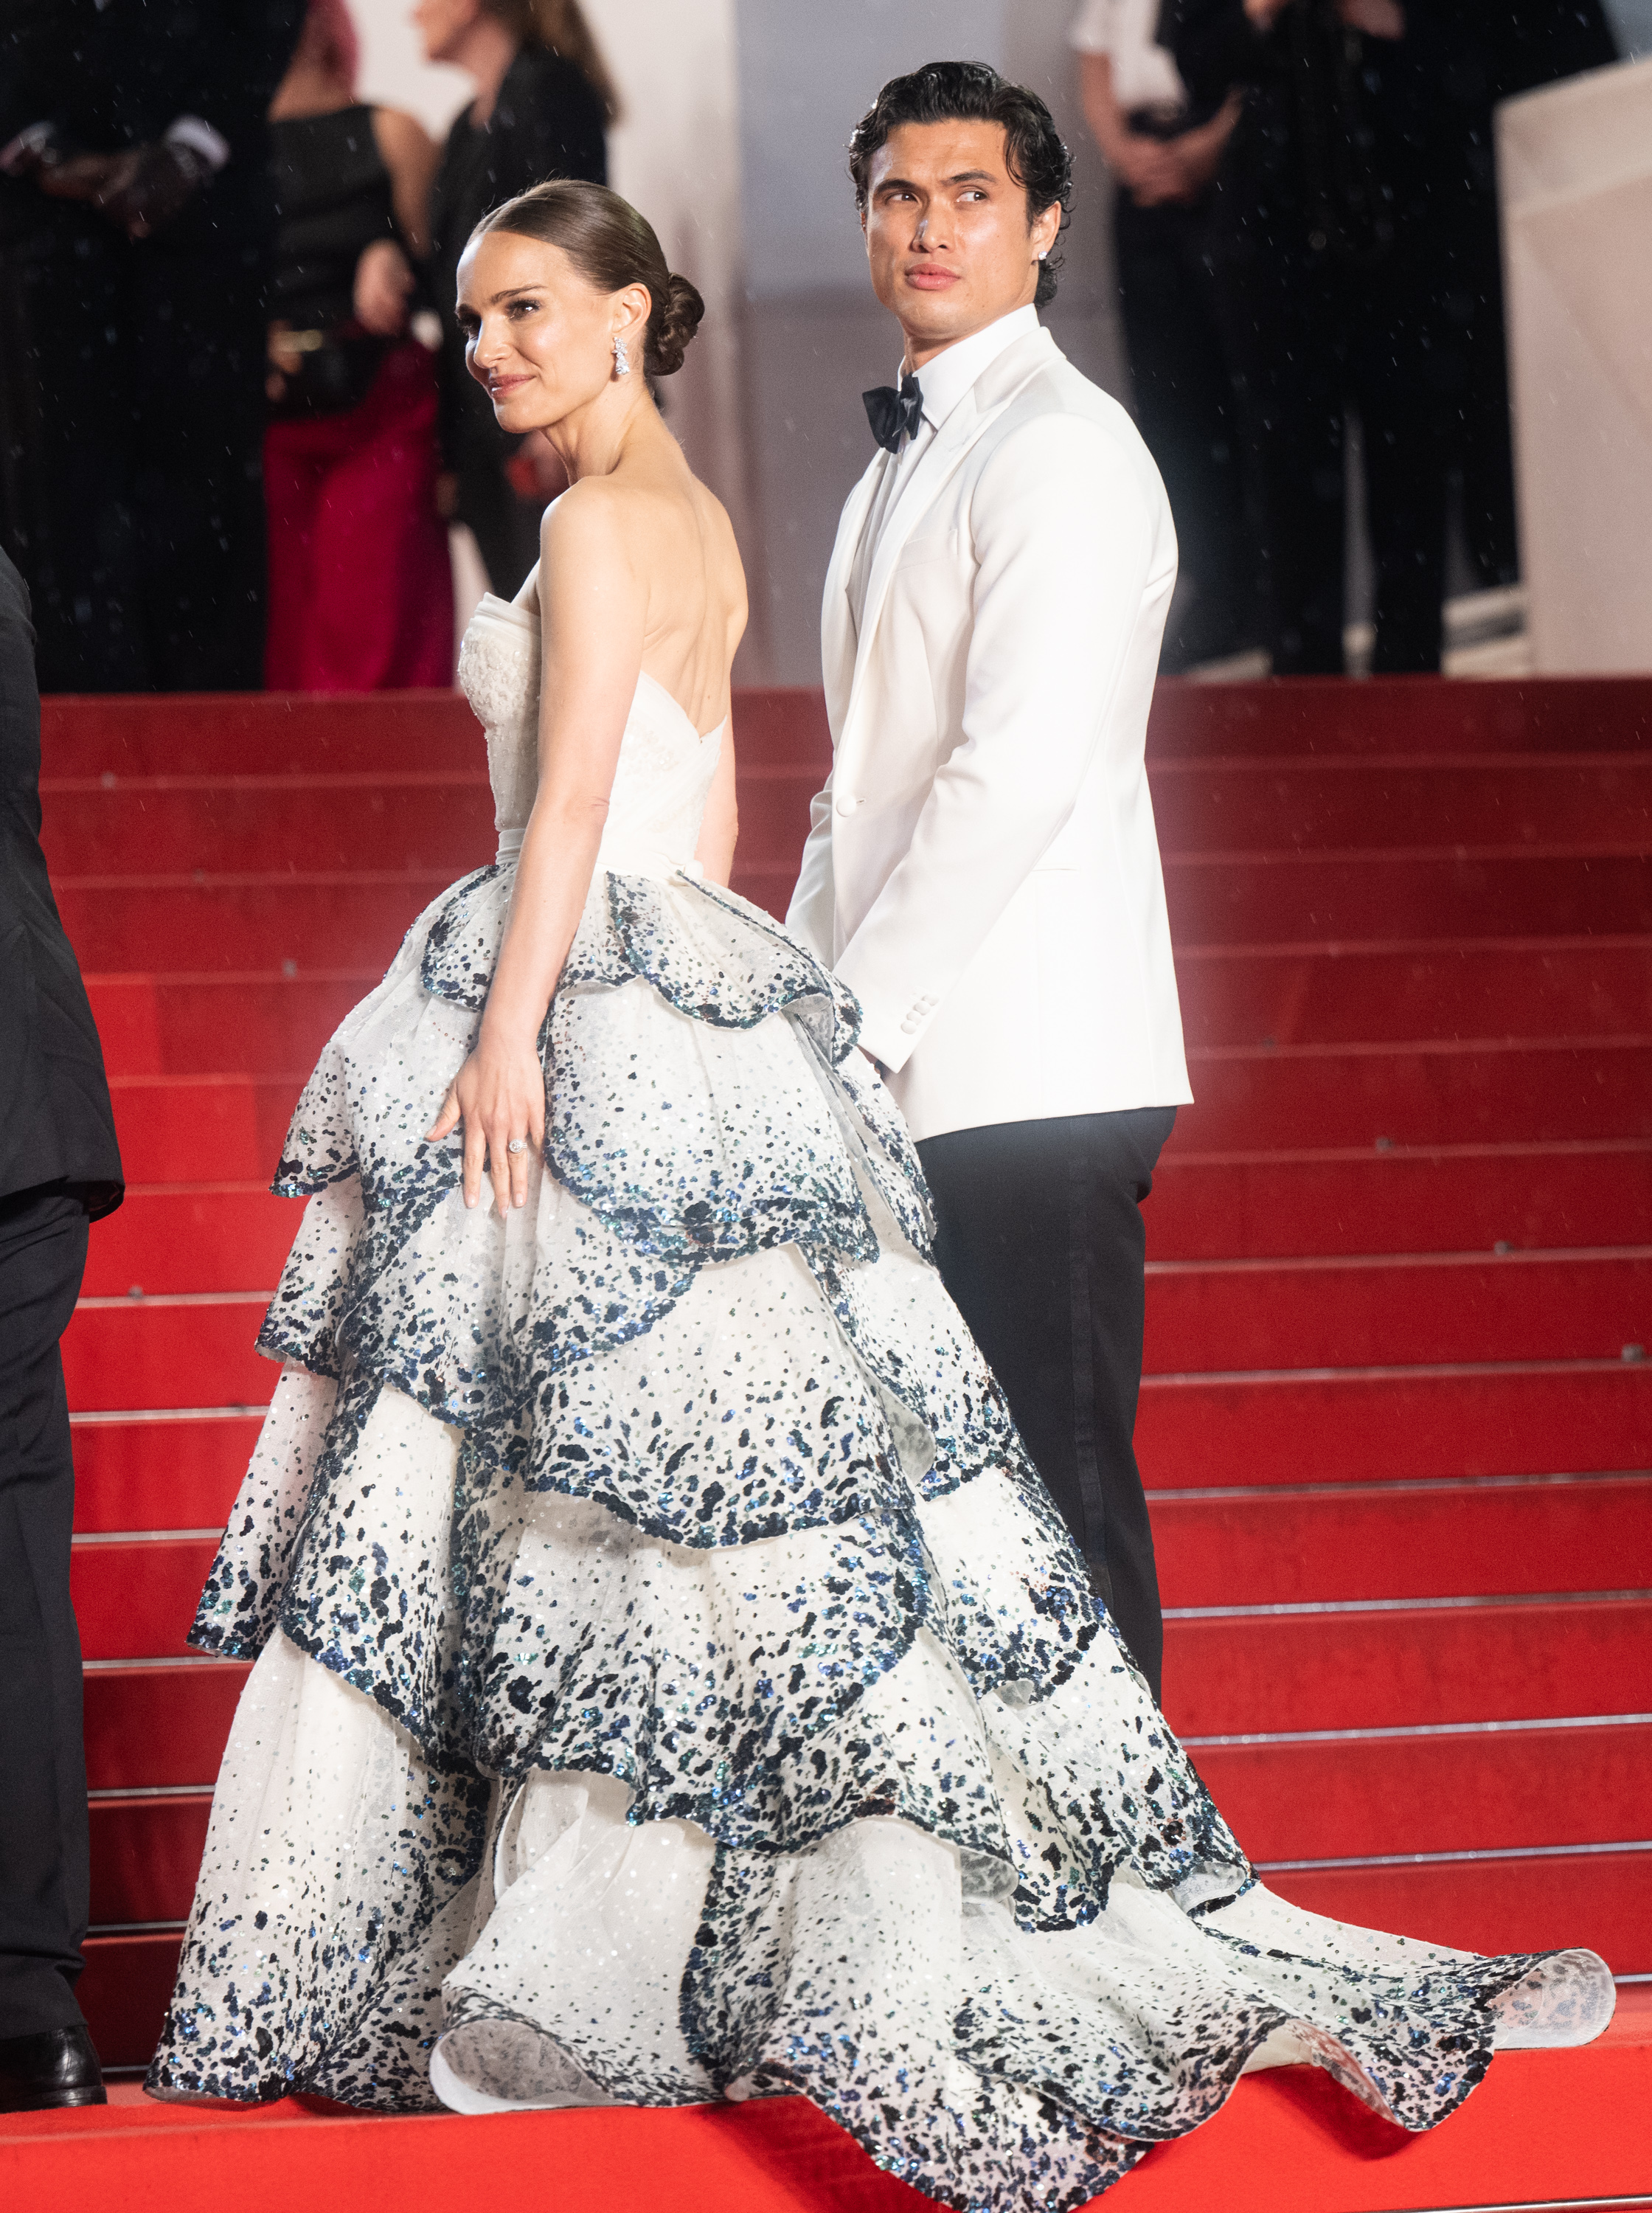 Natalie Portman wears a haute couture dress designed by sir